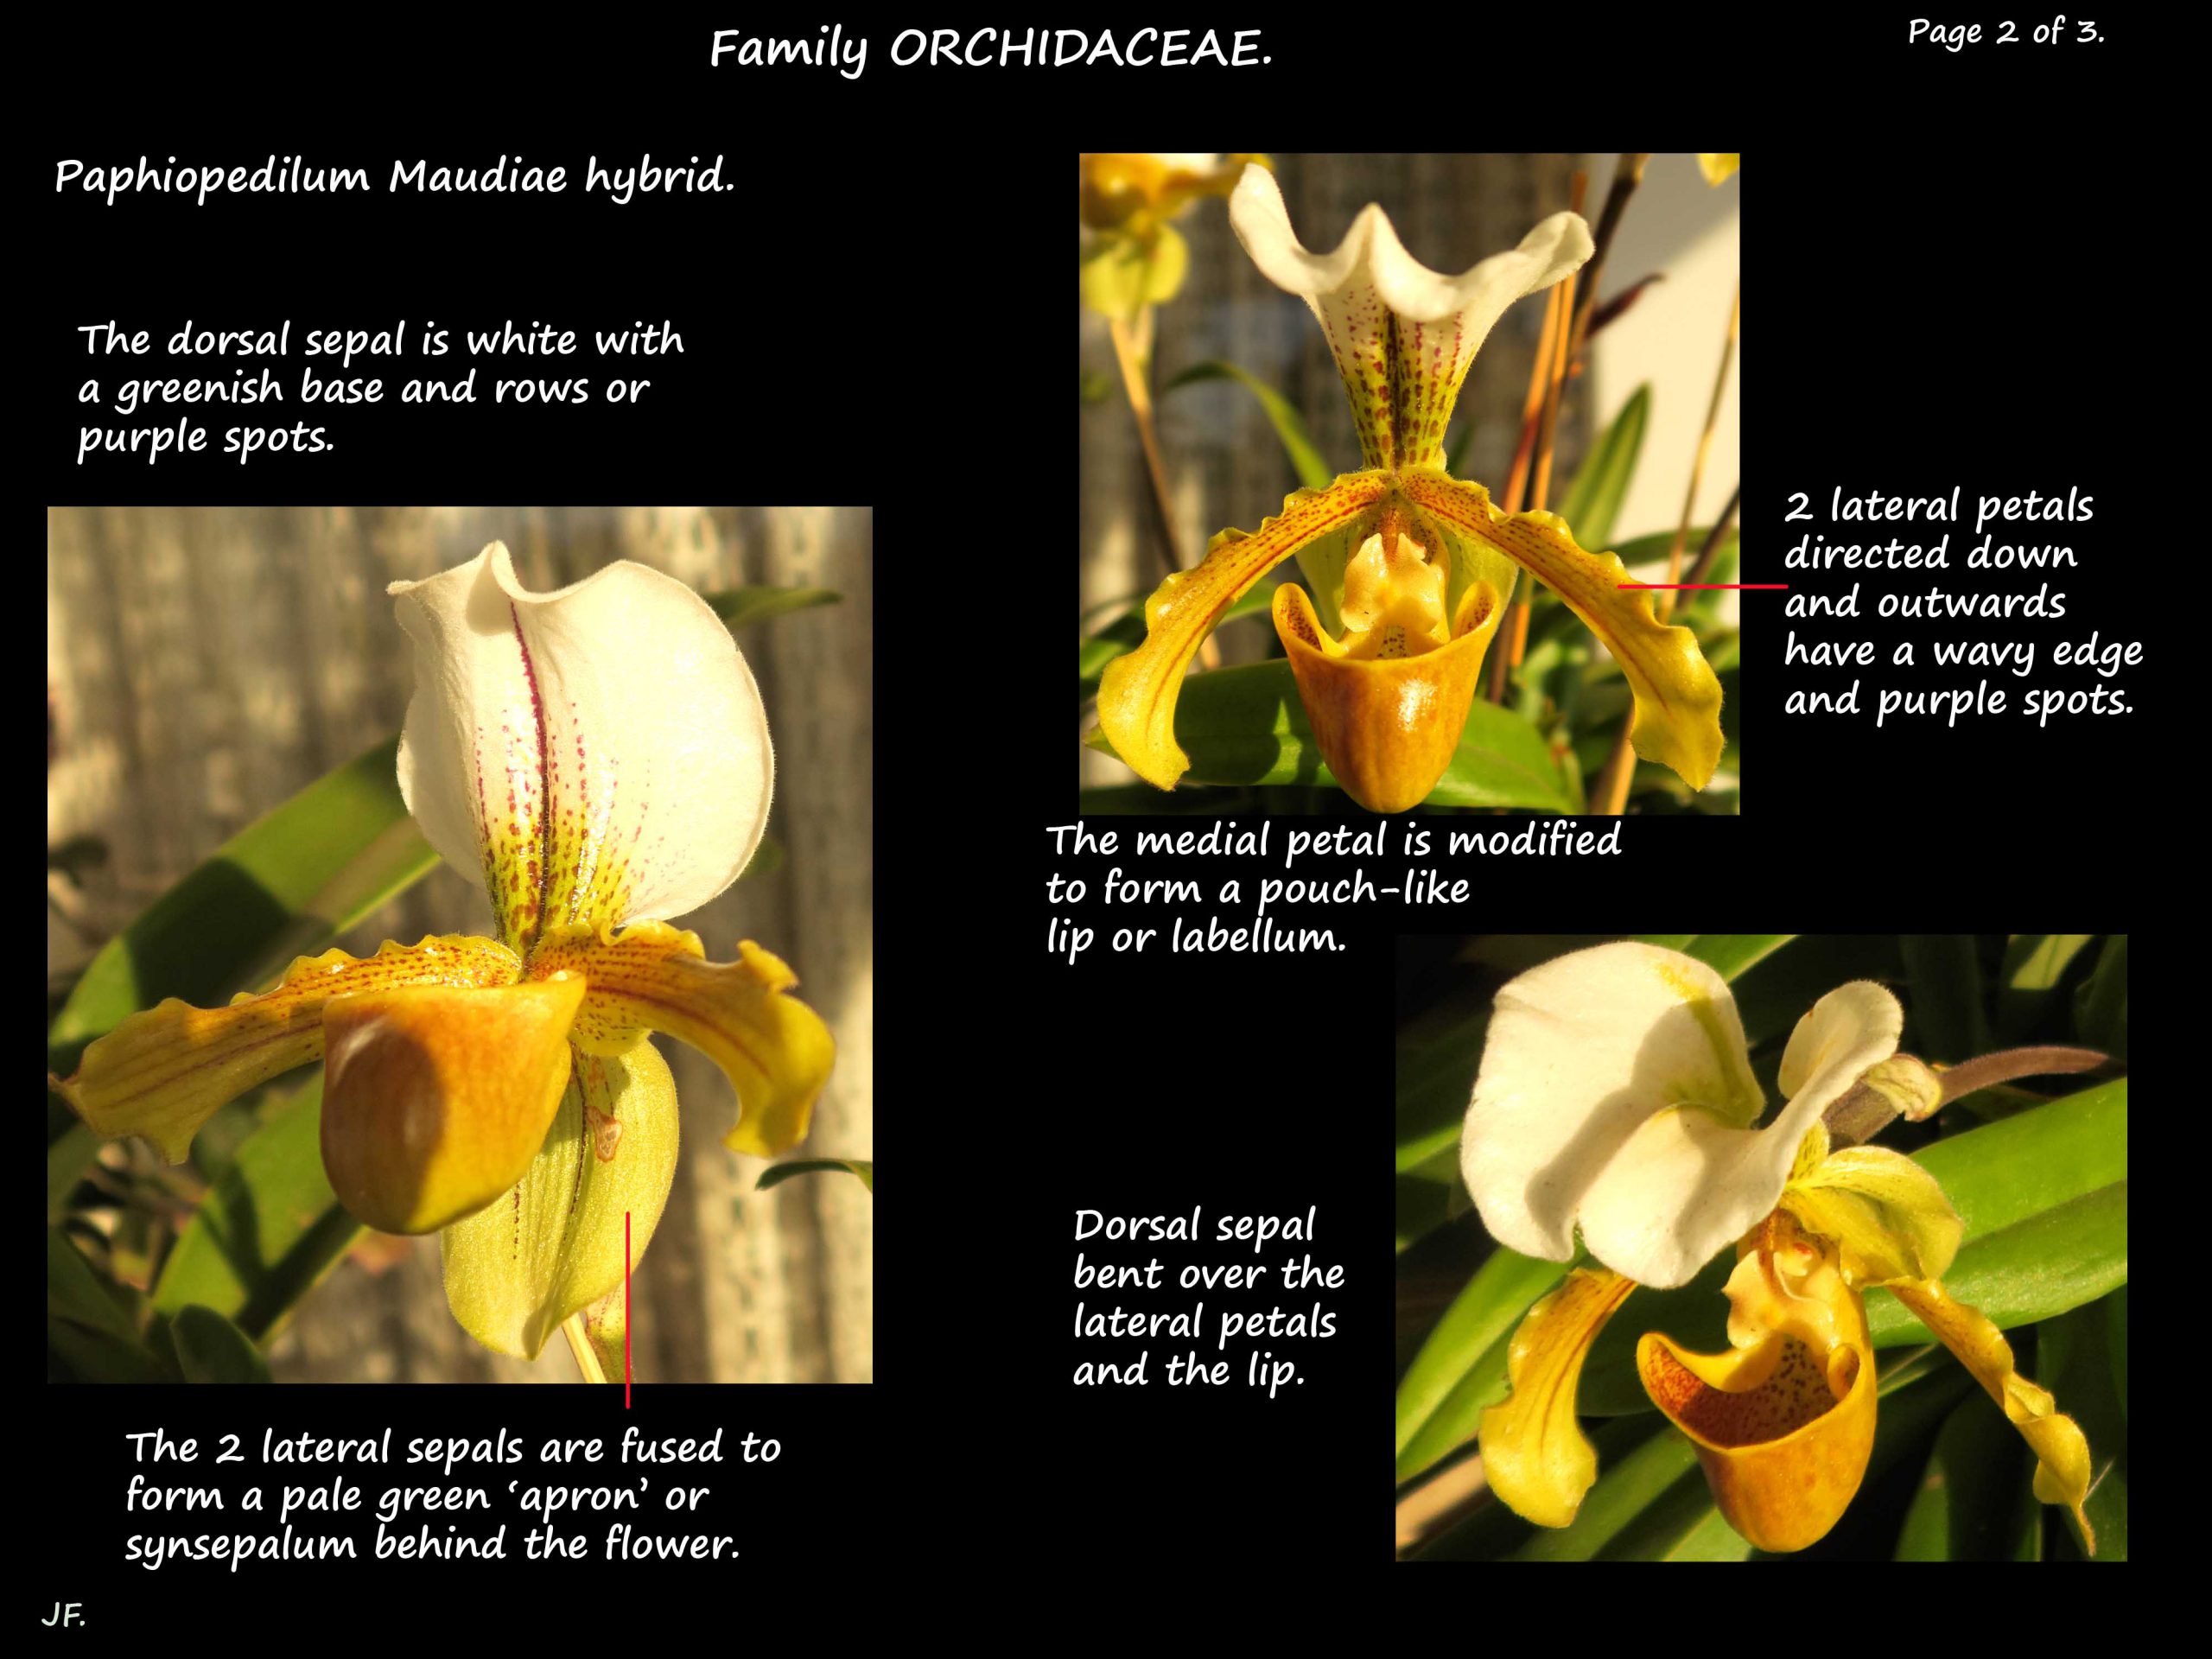 2 Venus Slipper orchid